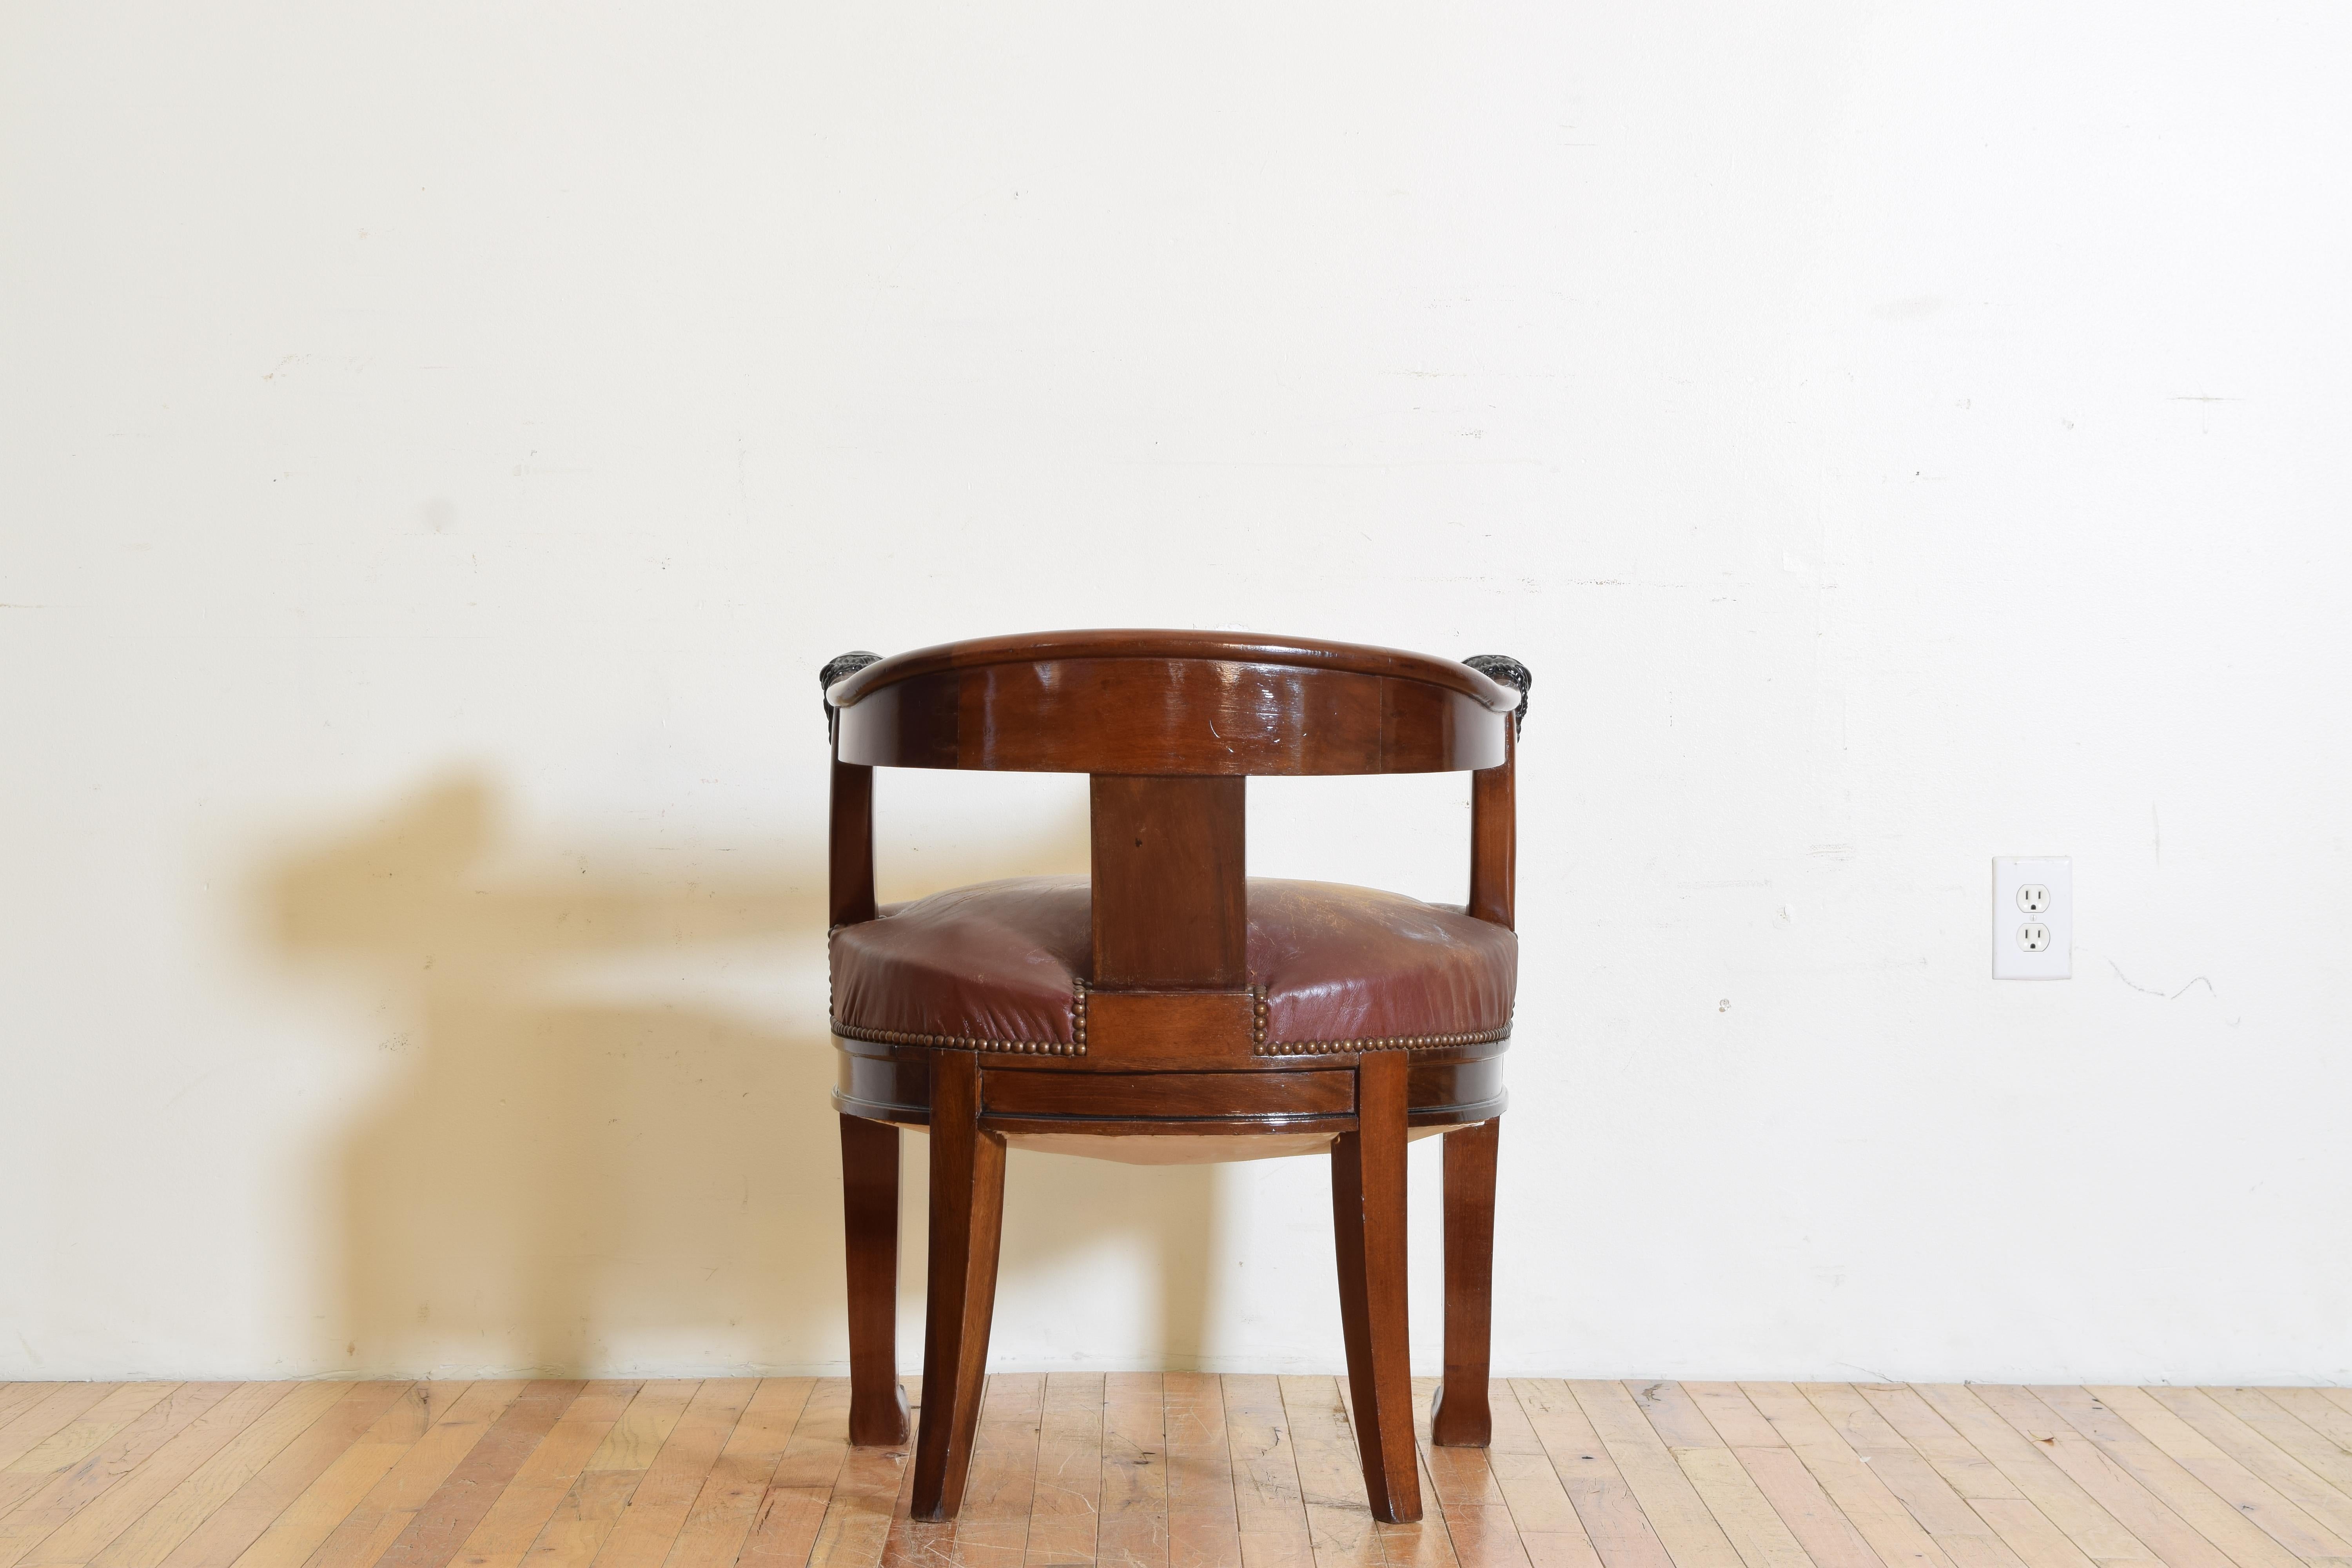 French Empire Revival Mahogany and Ebonized Desk Chair, Last Quarter 19th Cen. 1